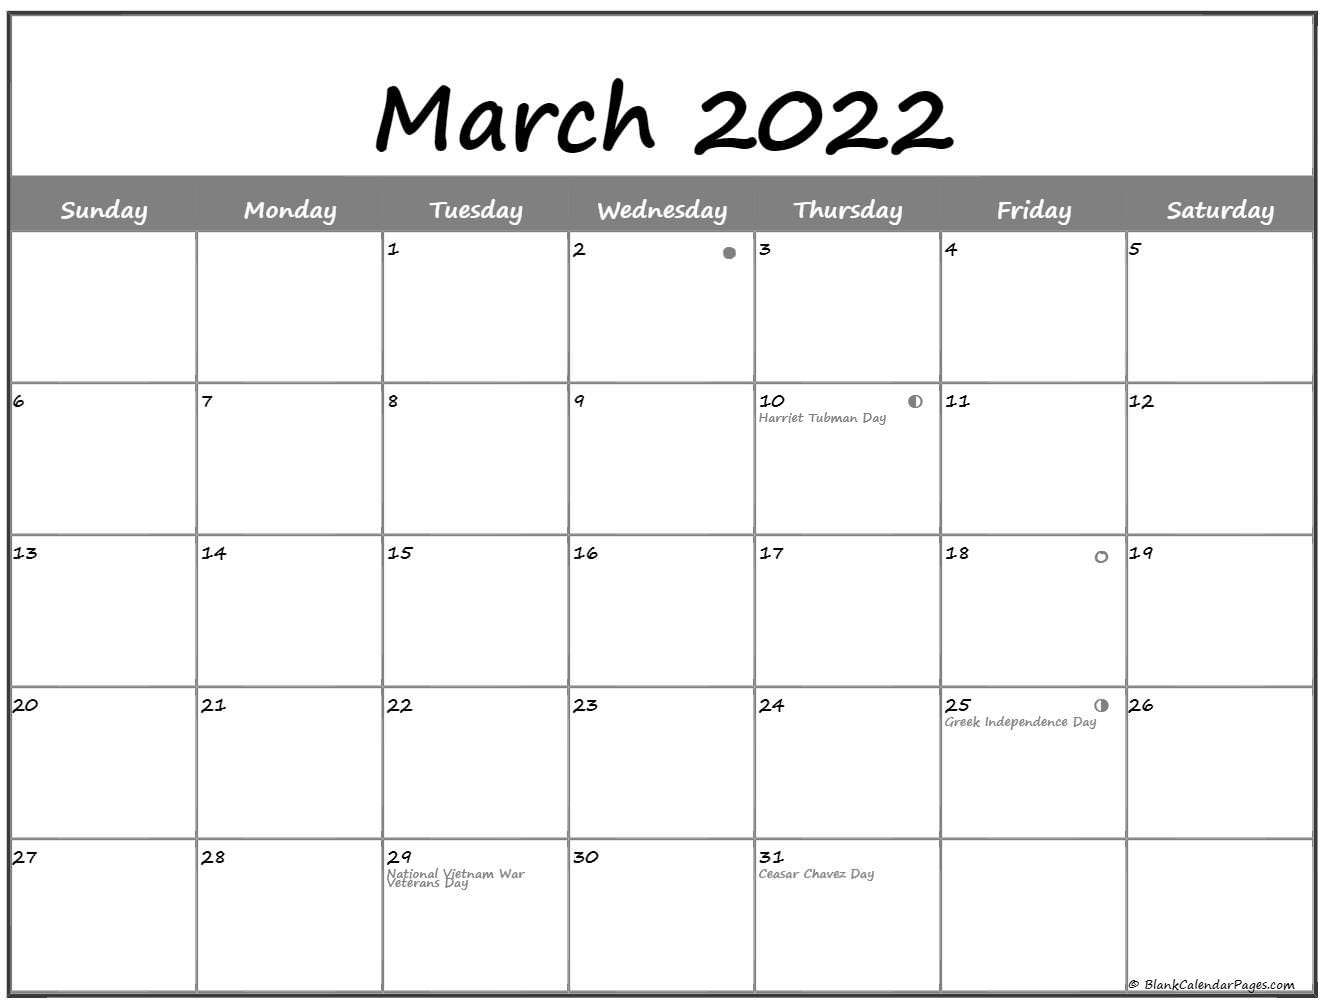 March 2022 Lunar Calendar | Moon Phase Calendar  2022 March April Calendar